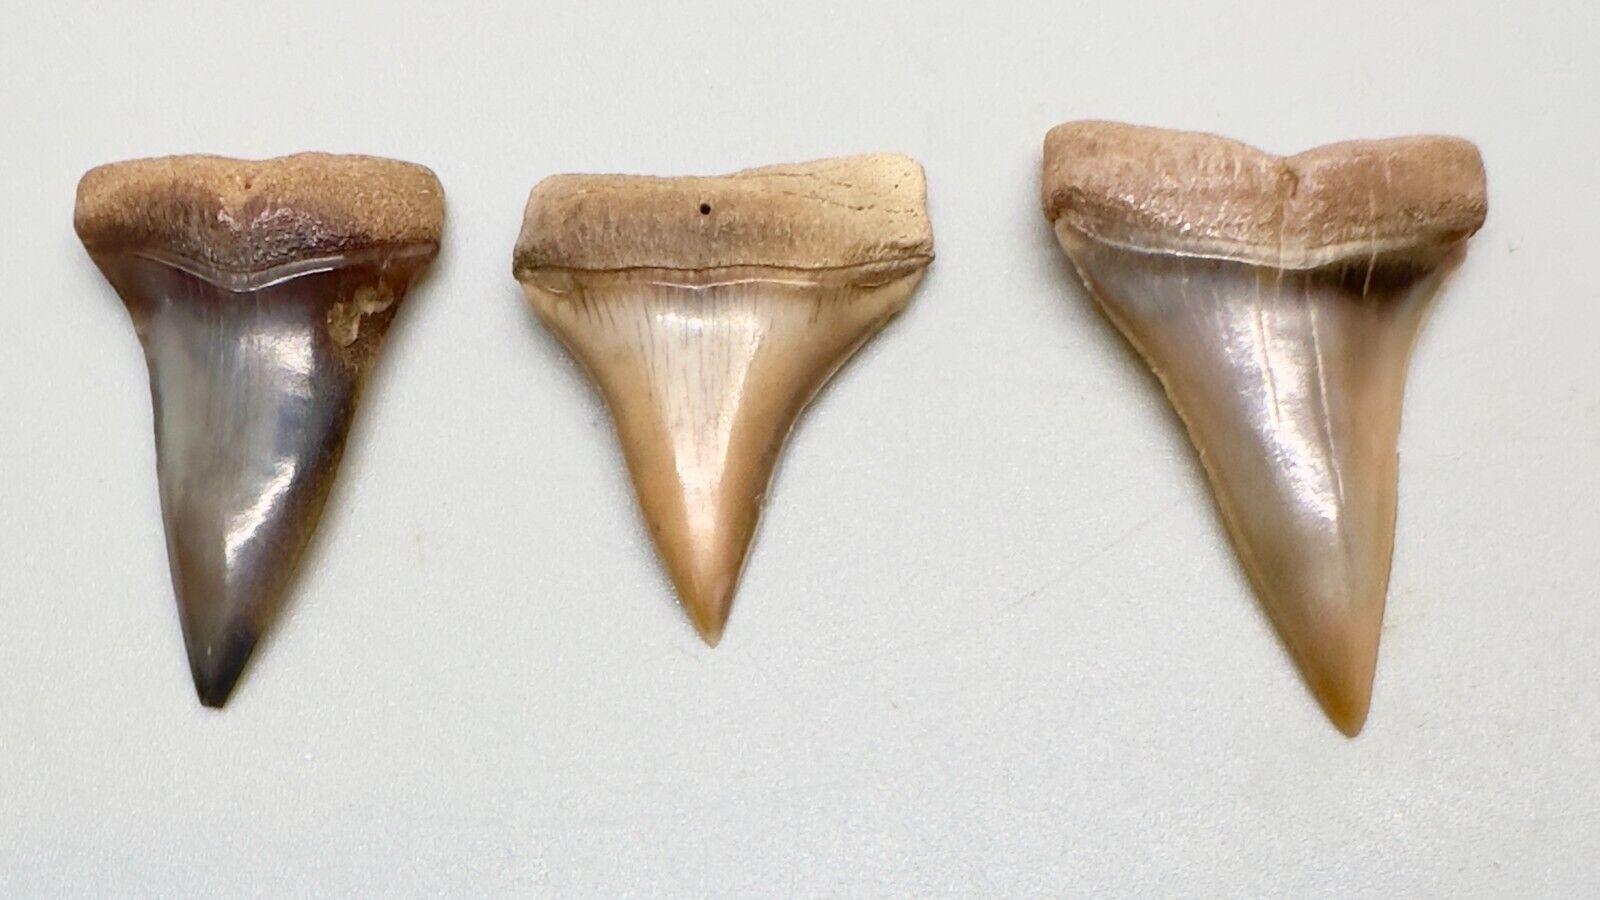 Group of 3 Beautiful Fossil EXTINCT MAKO Shark Teeth - I. hastalis - Peru